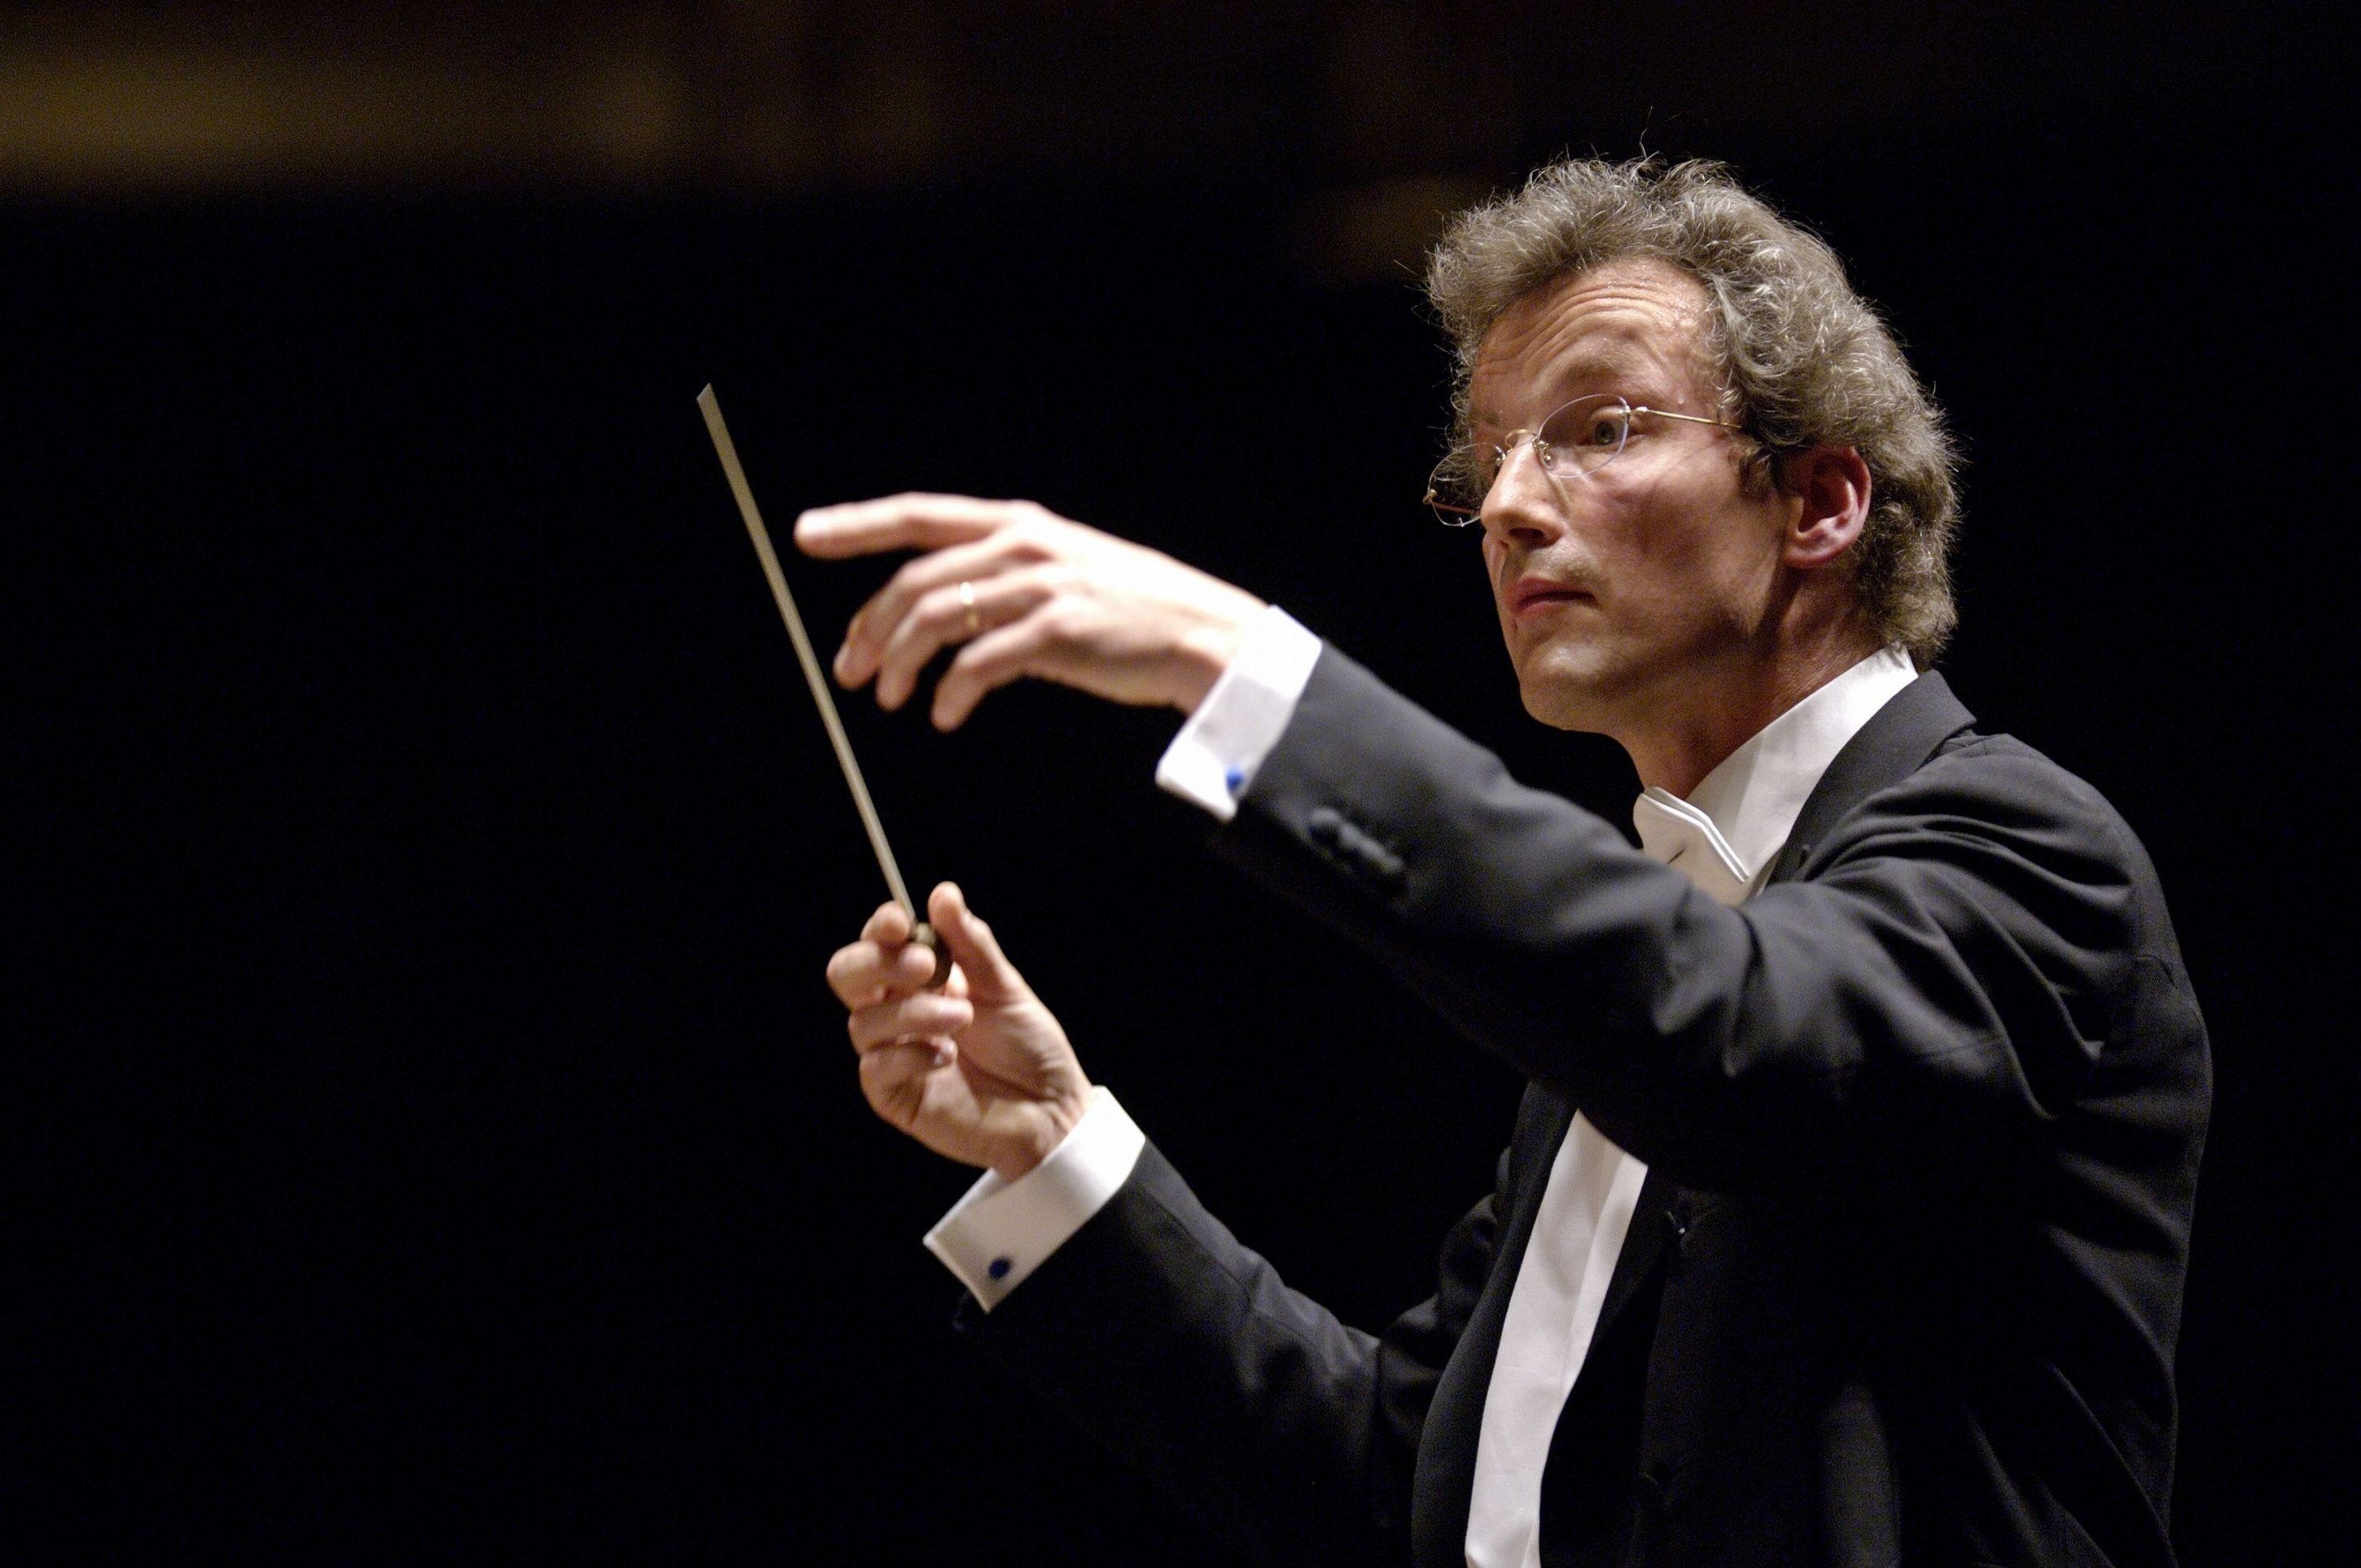 Orchestra conductor. Сесар Альварес дирижер. Фото Юстуса Франца дирижера.